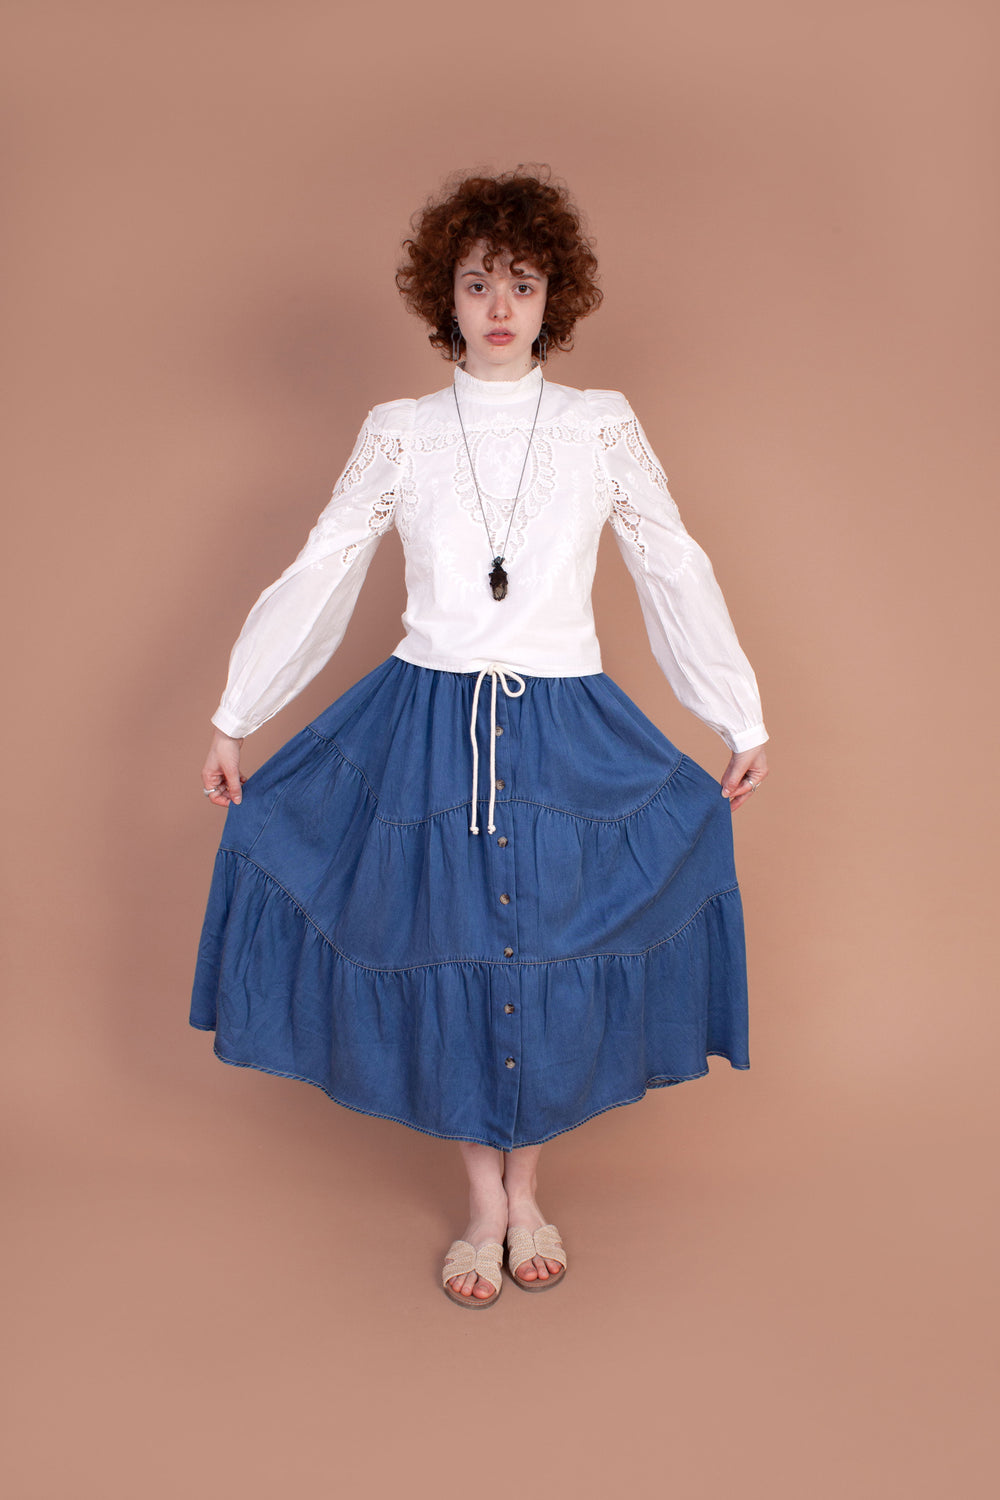 Thyme Skirt - Chambray